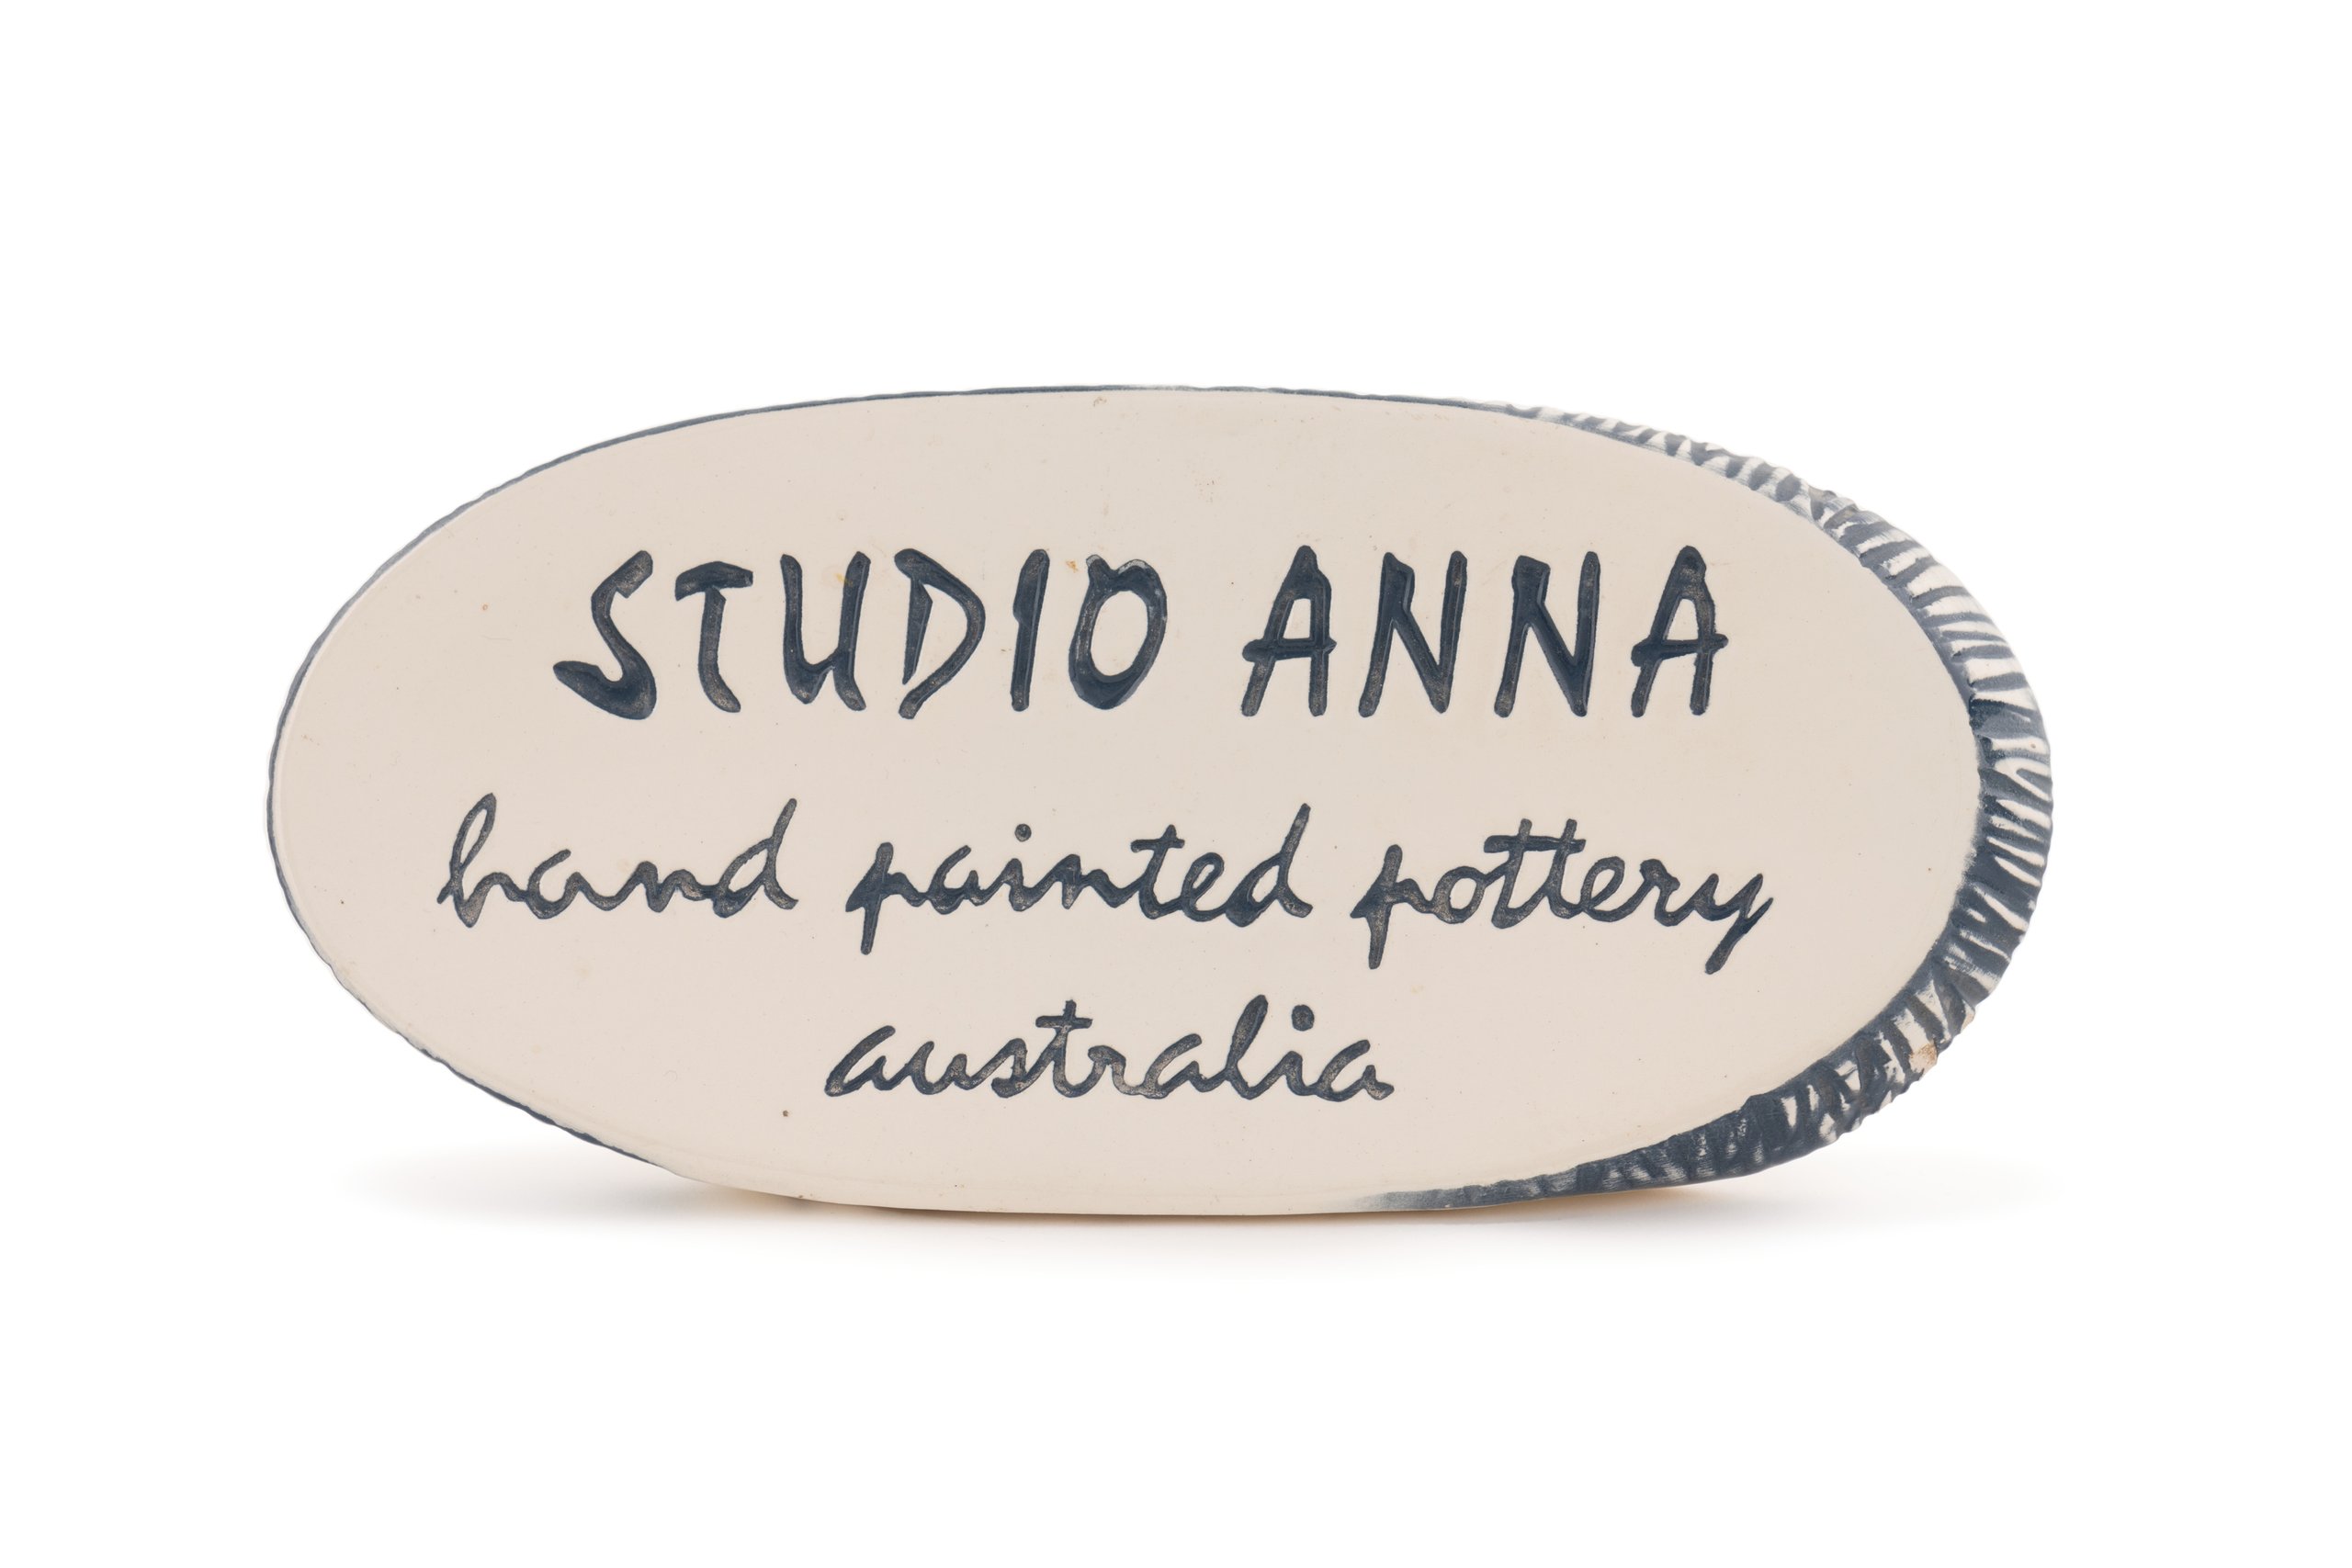 'Studio Anna' earthenware plaque made by Studio Anna Pottery